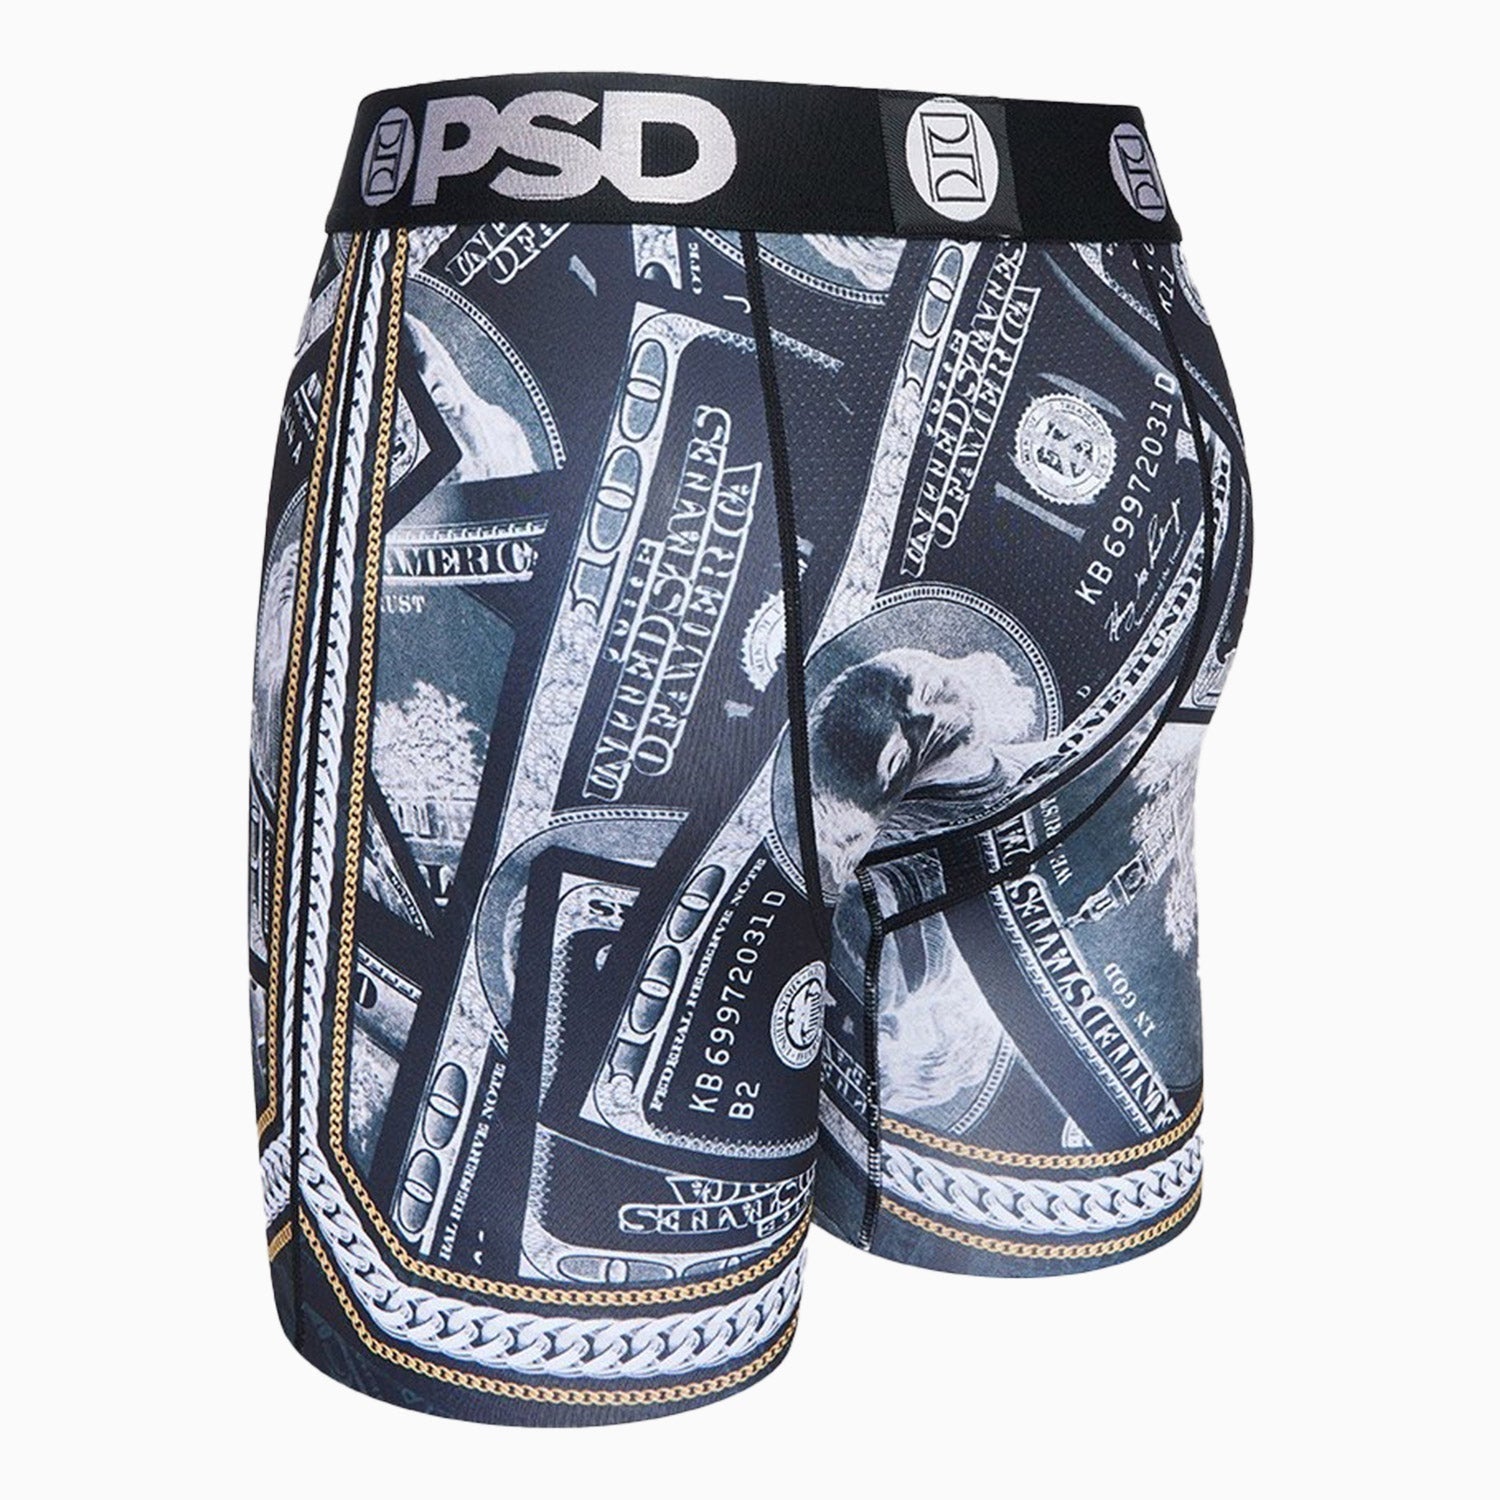 PSD Underwear Men's Dark Money Sport - Color: Black - Tops and Bottoms USA -